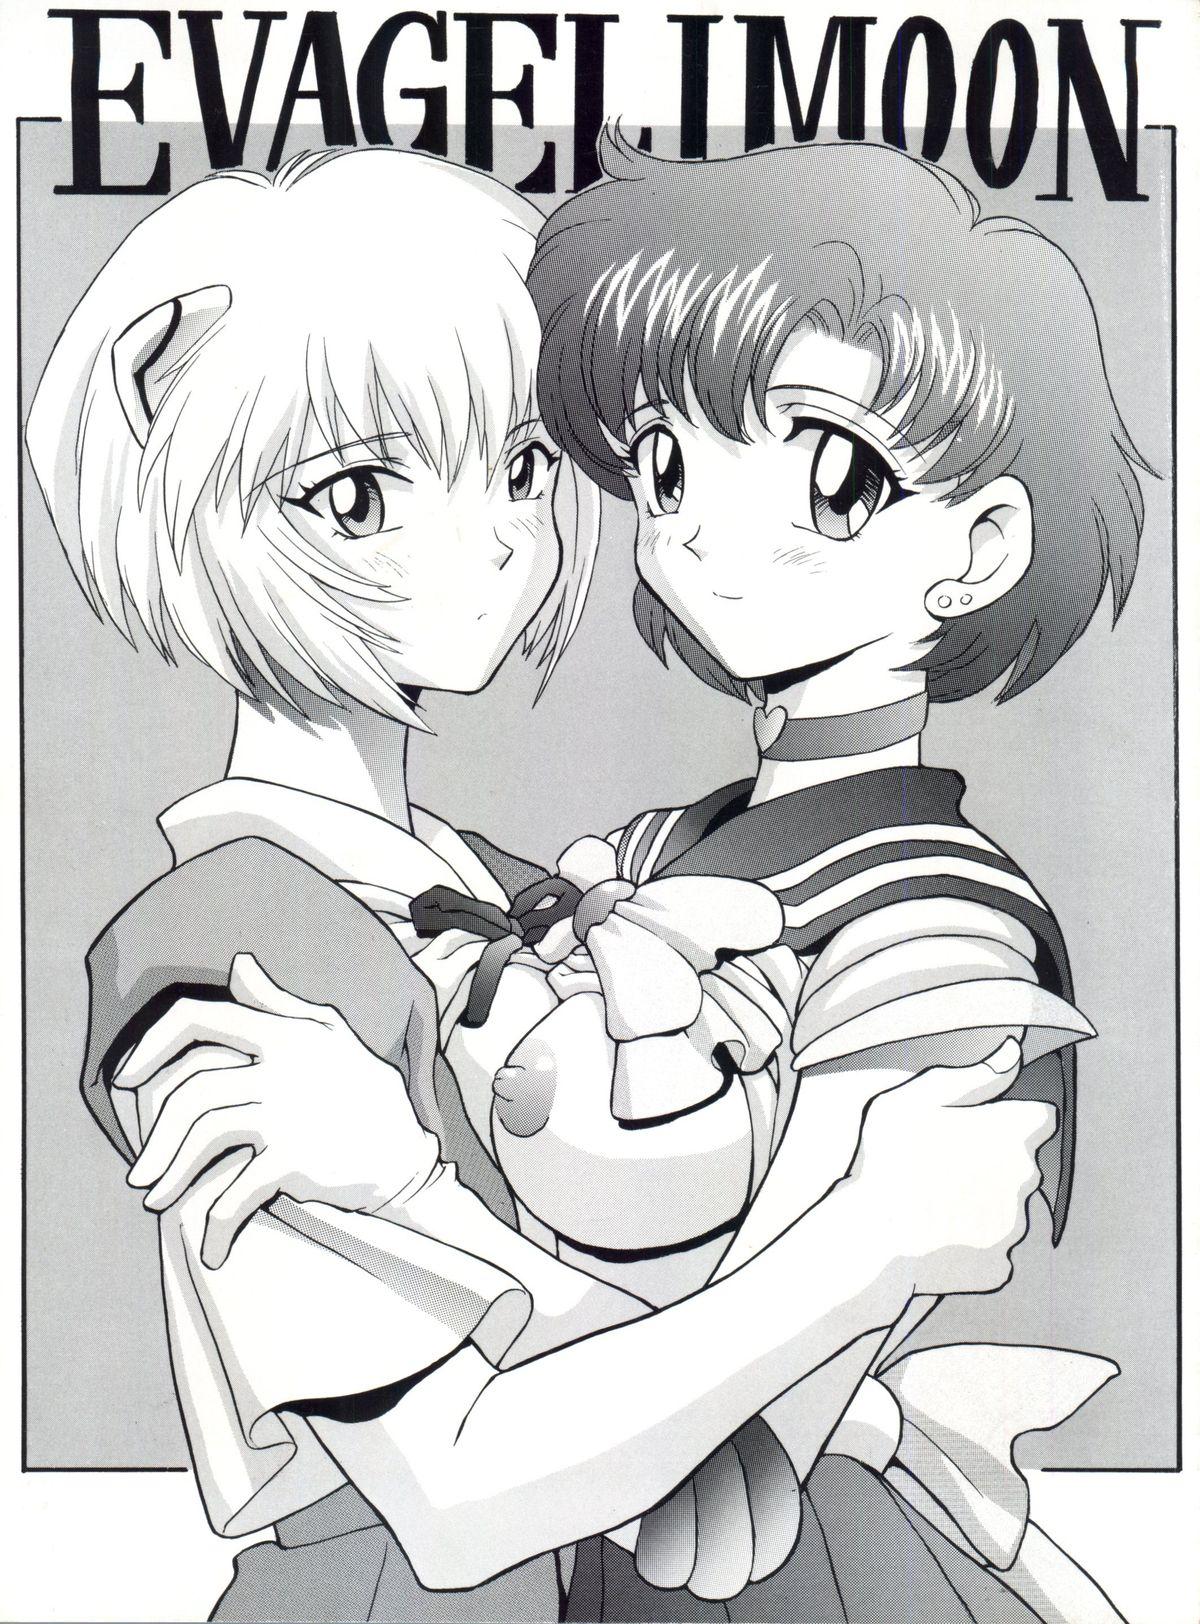 Reverse Evagelimoon - Neon genesis evangelion Sailor moon Massage - Page 1